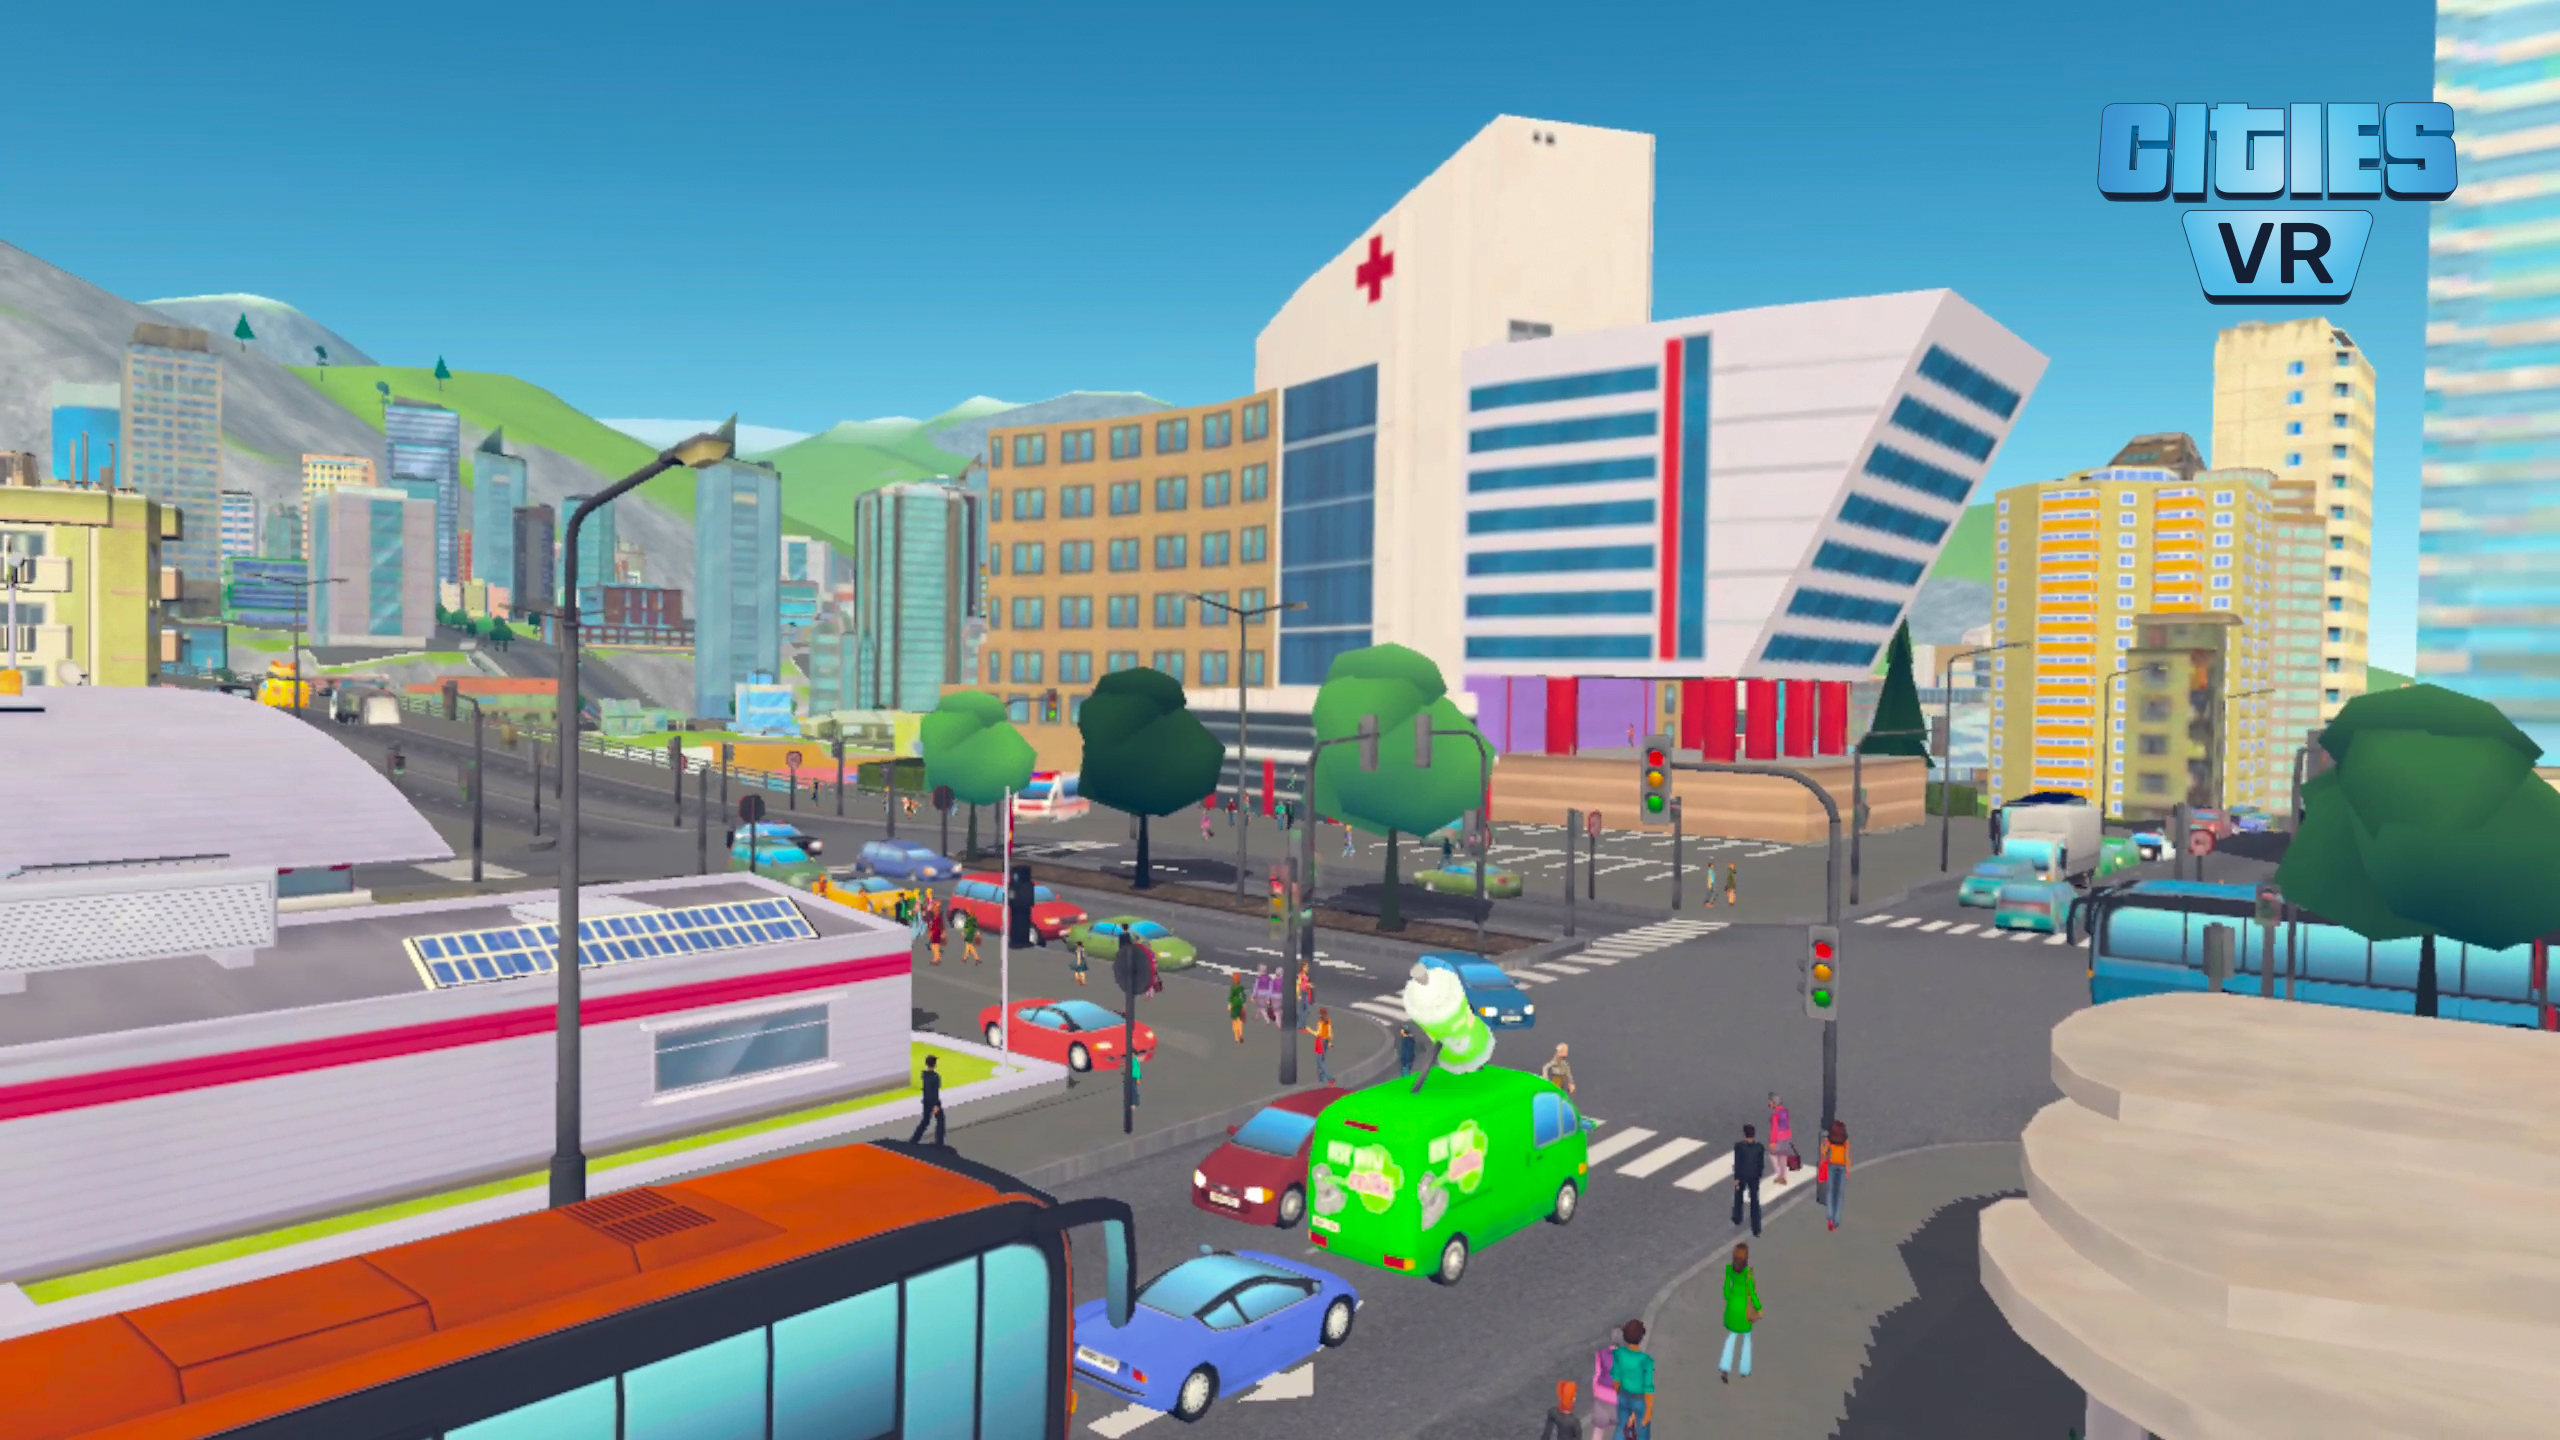 Vr город. Little Cities VR. Город из ВР. Cities VR. VR City Туапсе.